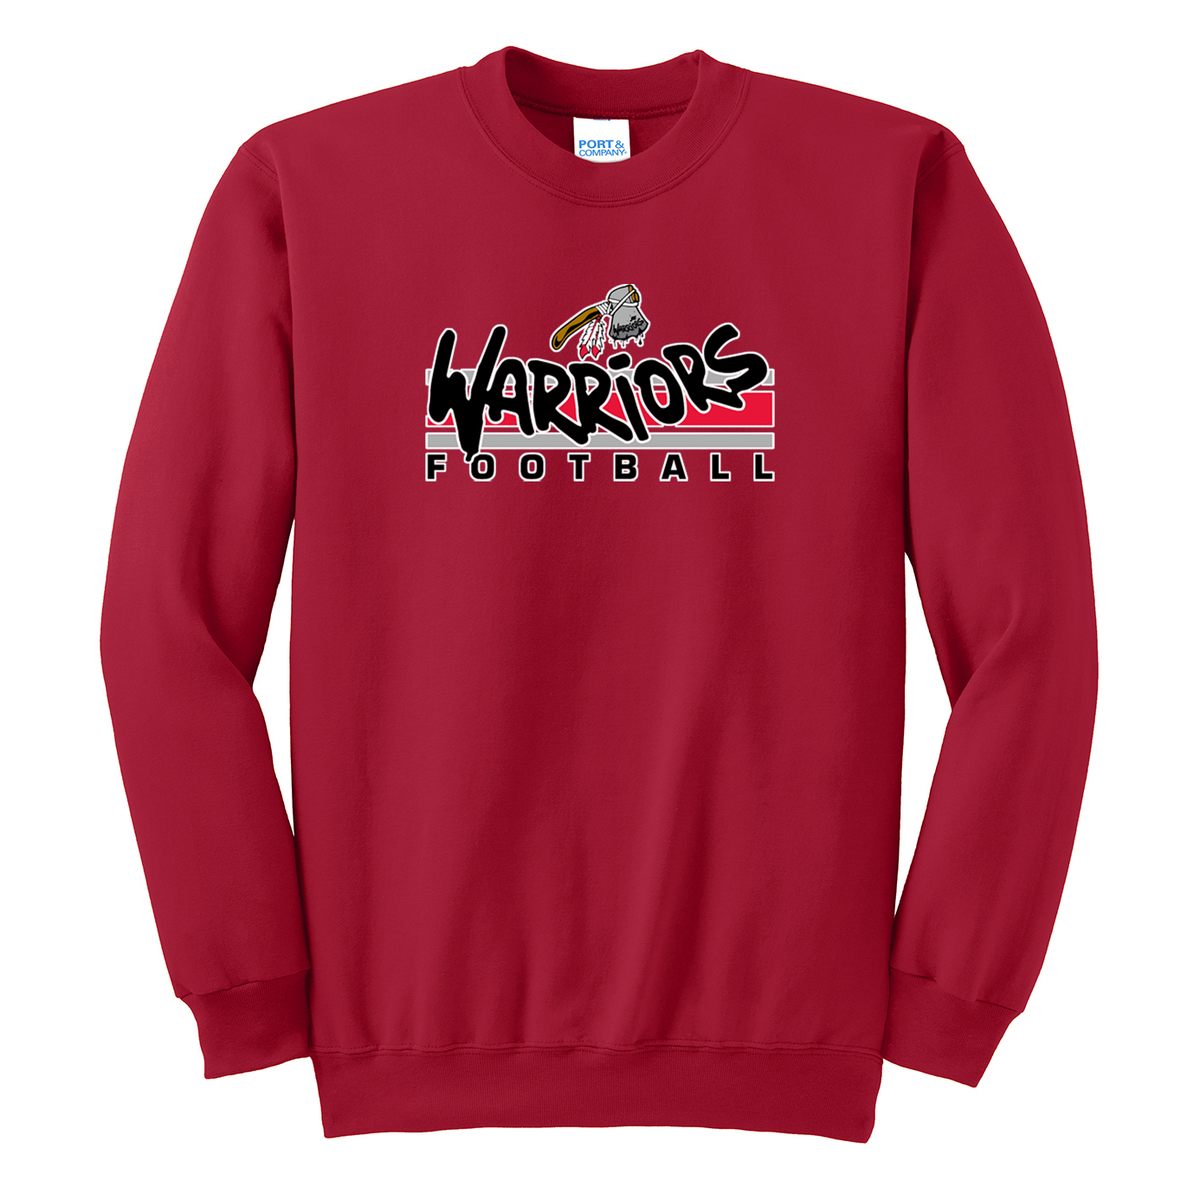 WV Warriors Football Crew Neck Sweater